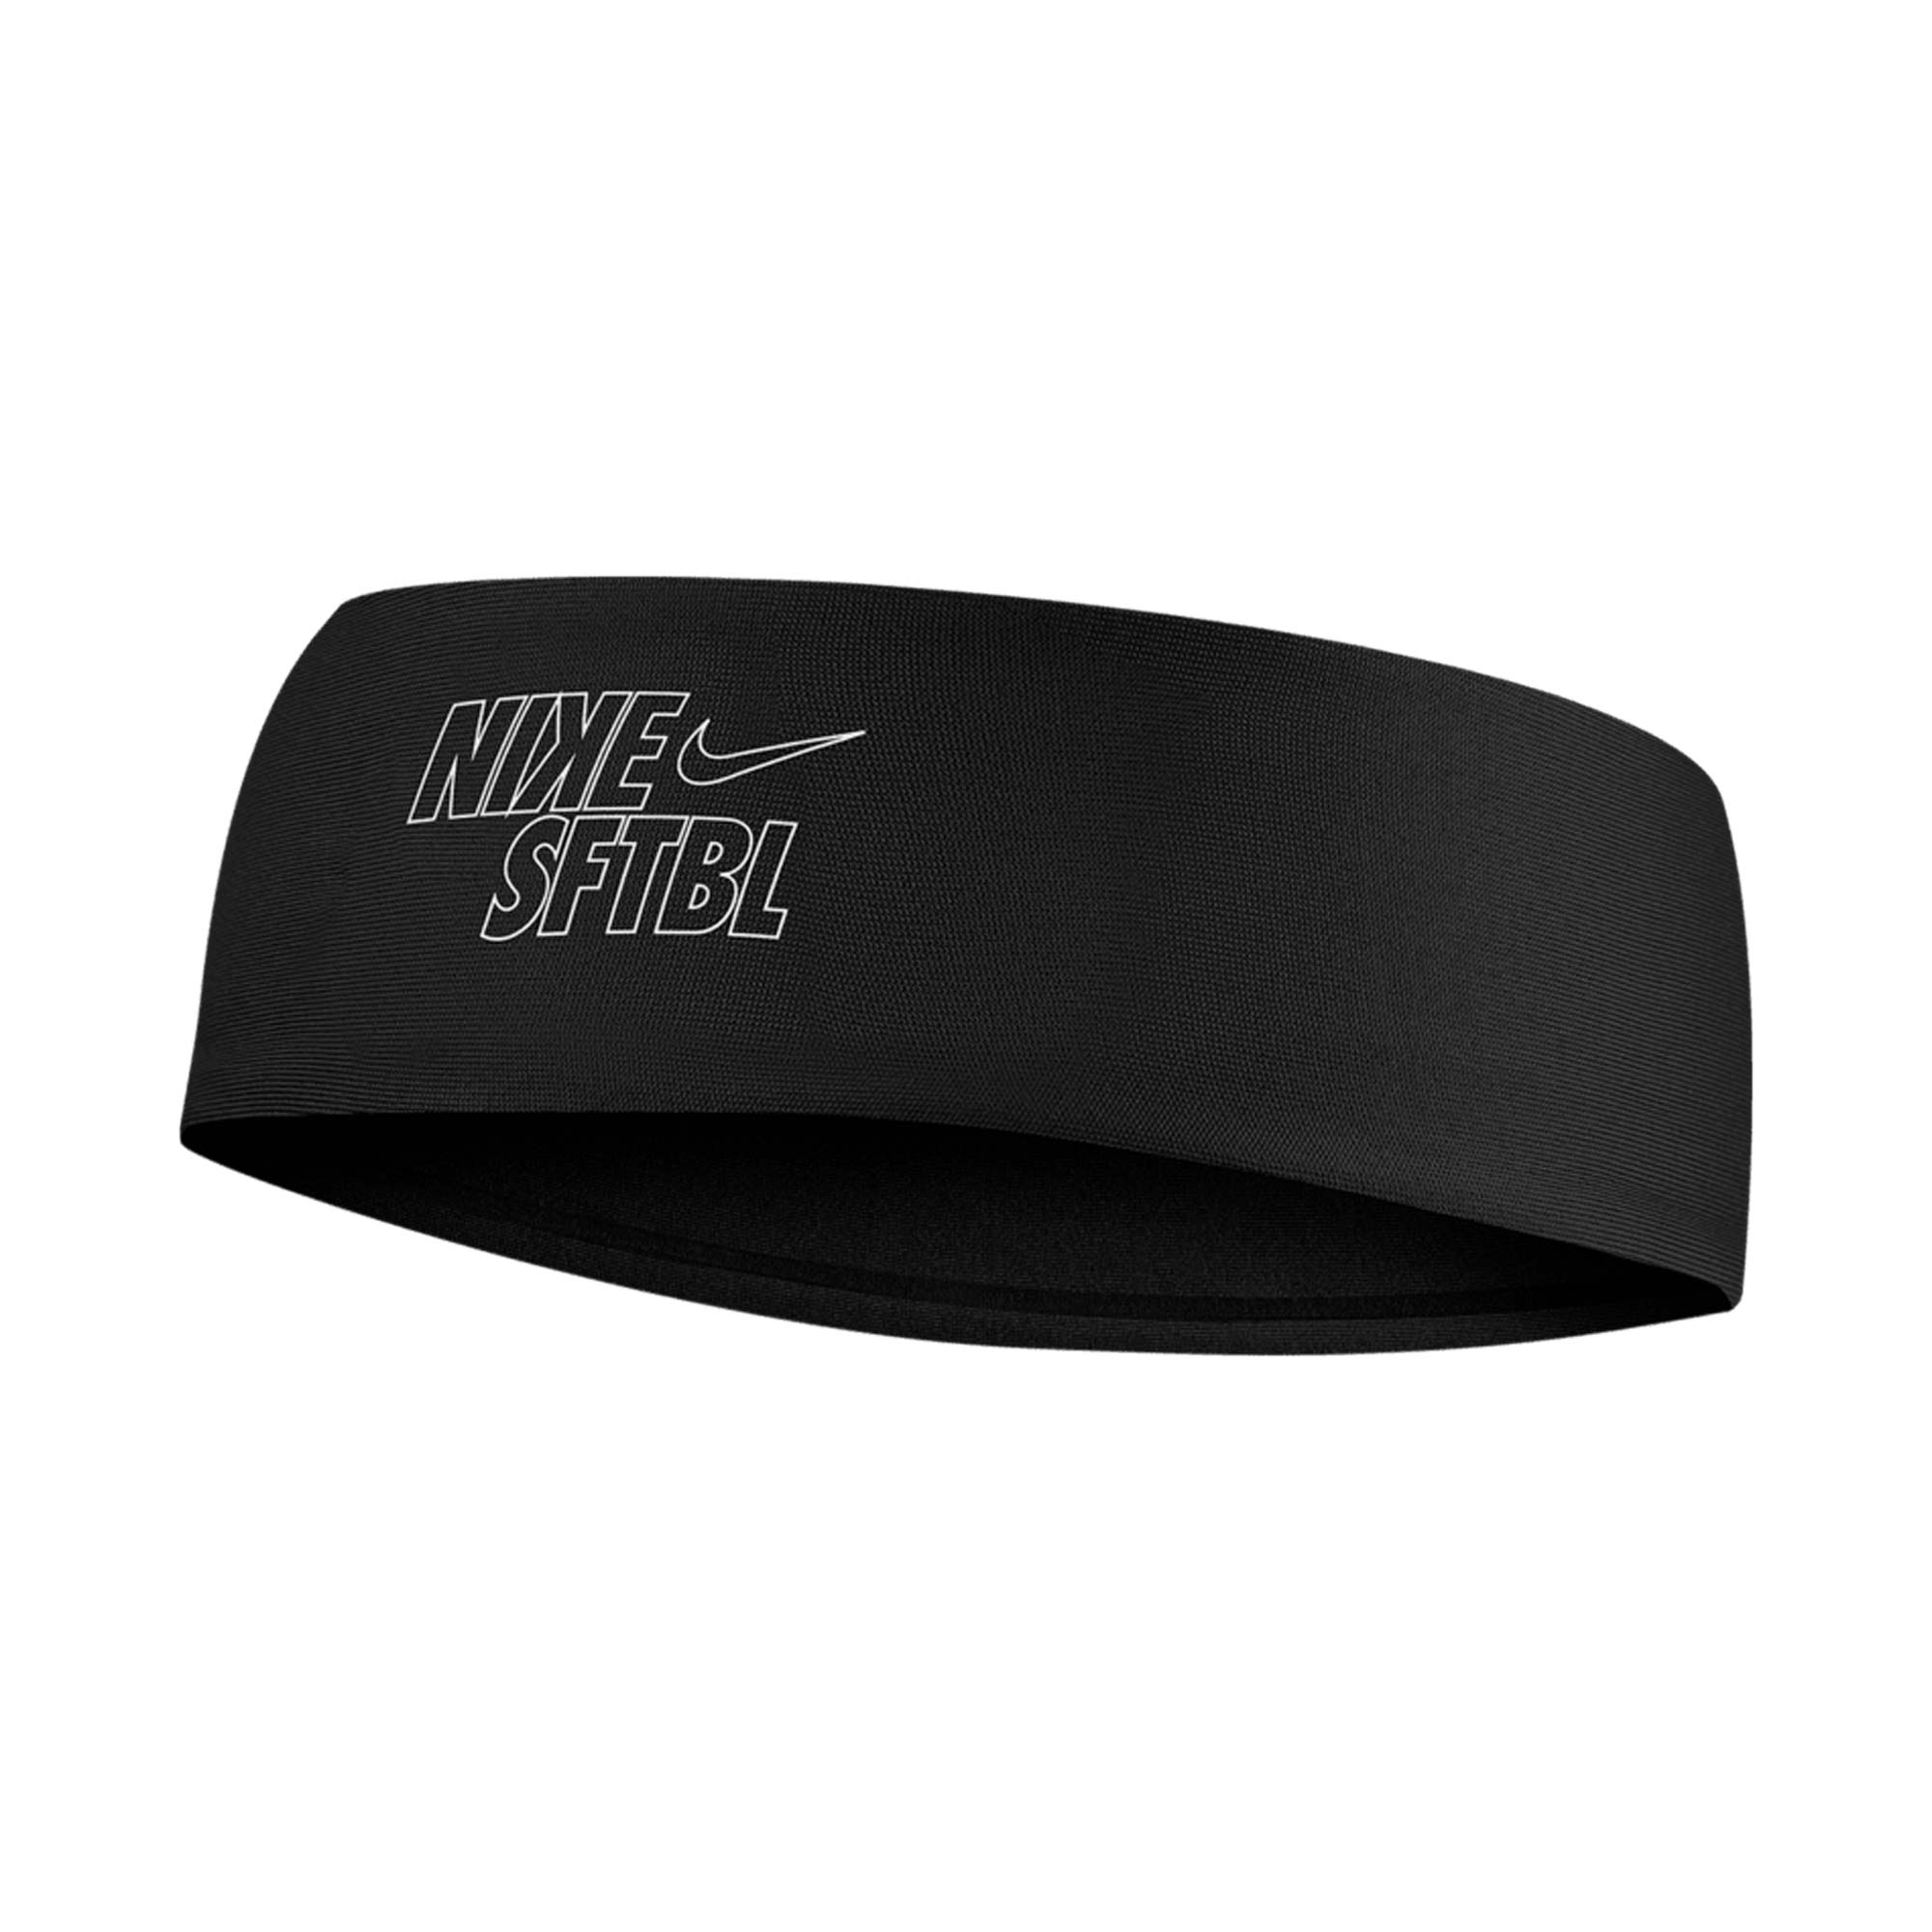 Nike fury Headband 3.0 Softball Black/White OSFM